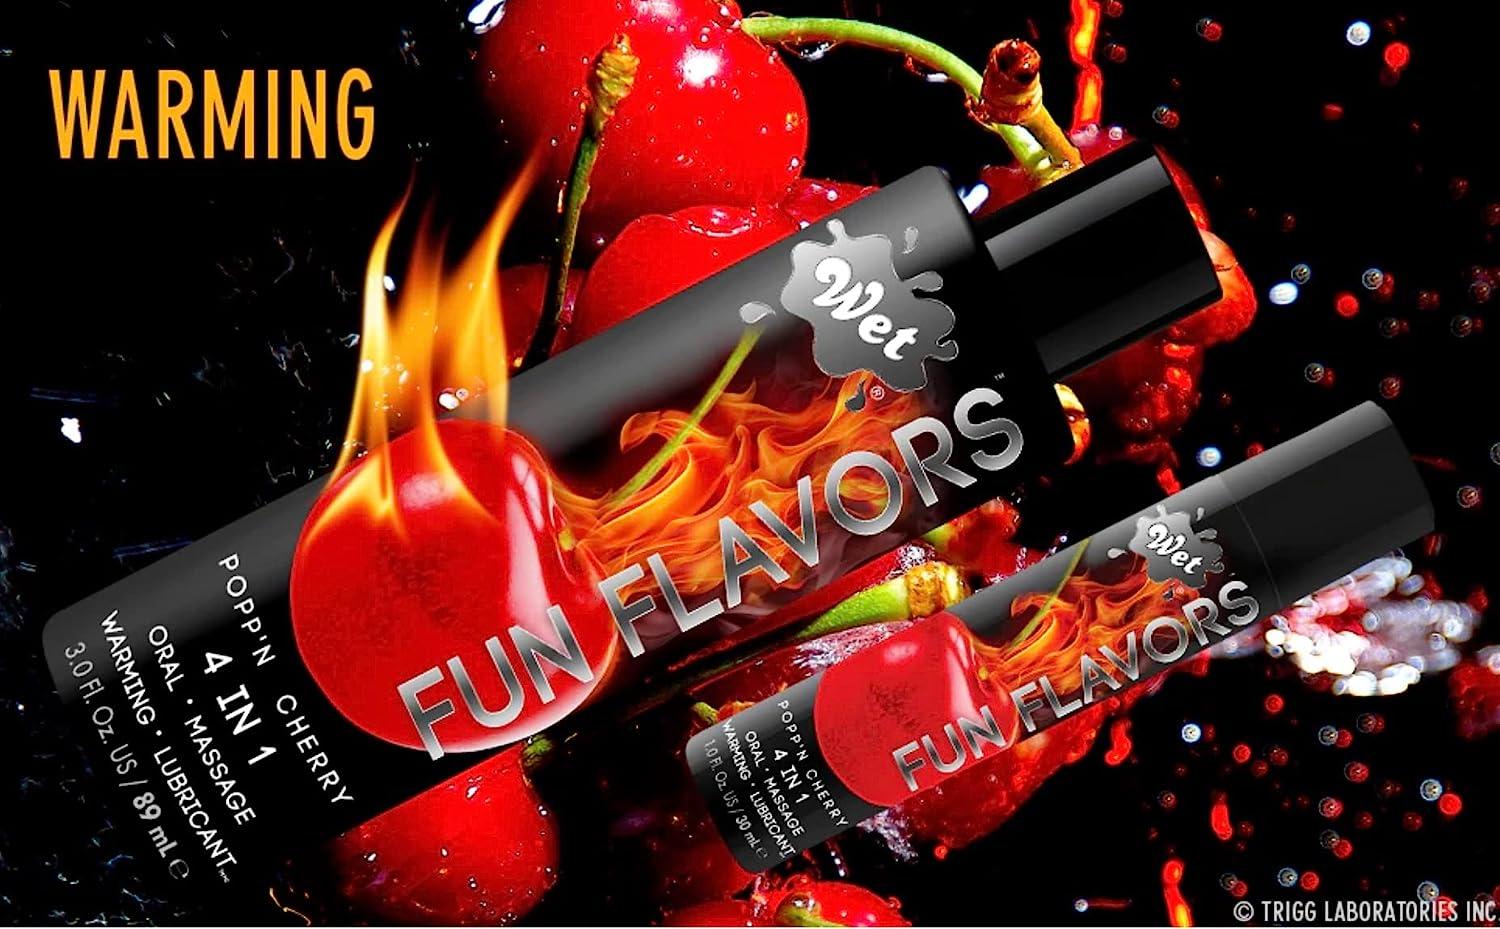 Wet Fun Flavors Popp'n Cherry 4 in 1 Warming Flavored Tasty Lube, Premium  Personal Lubricant, Men, Women & Couples, Foreplay & Massage, Paraben Free,  Gluten Free, Stain Free, Sugar Free